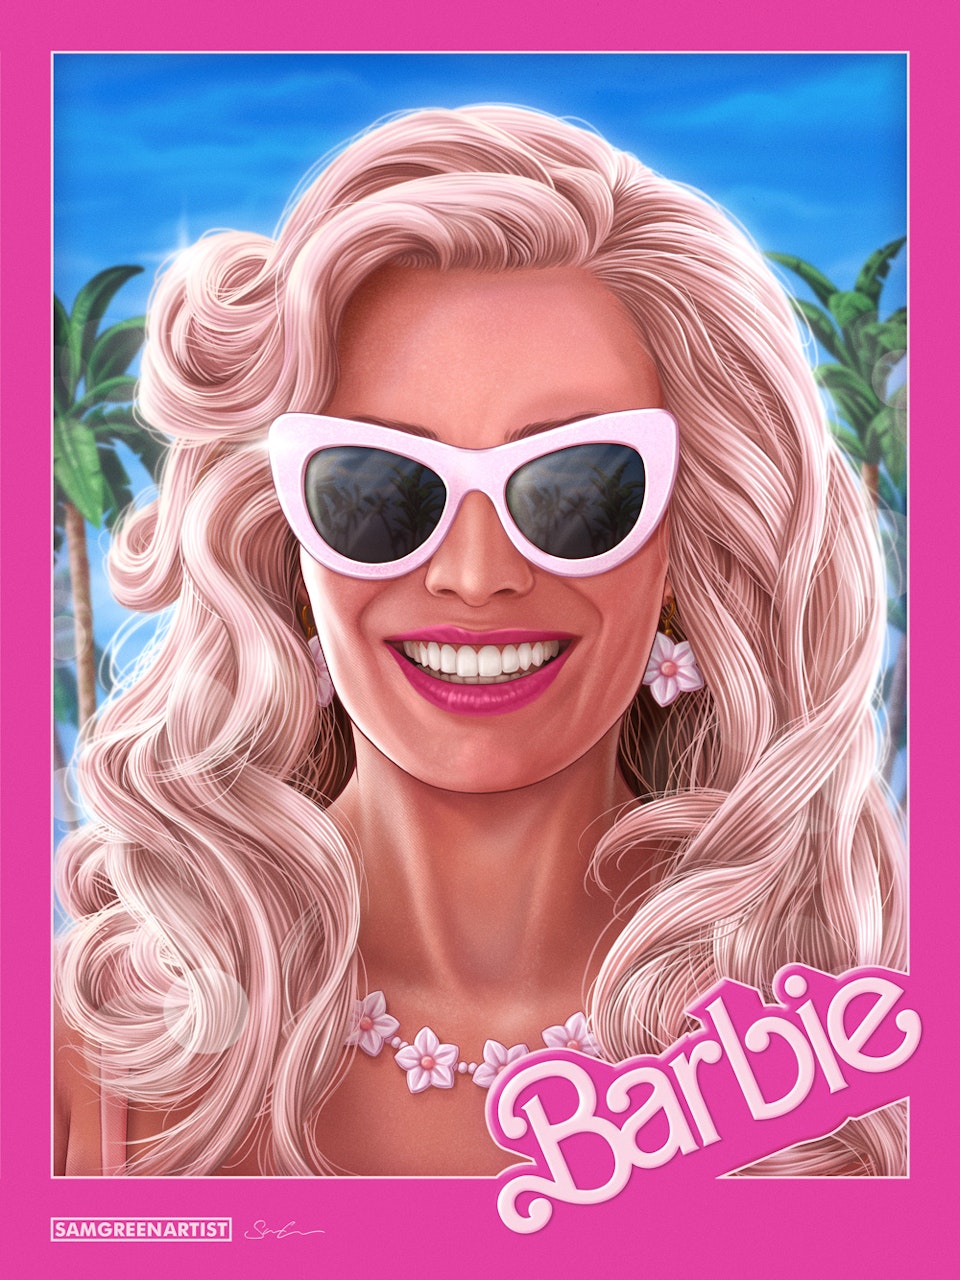 Barbenheimer - Standalone Barbie portrait.